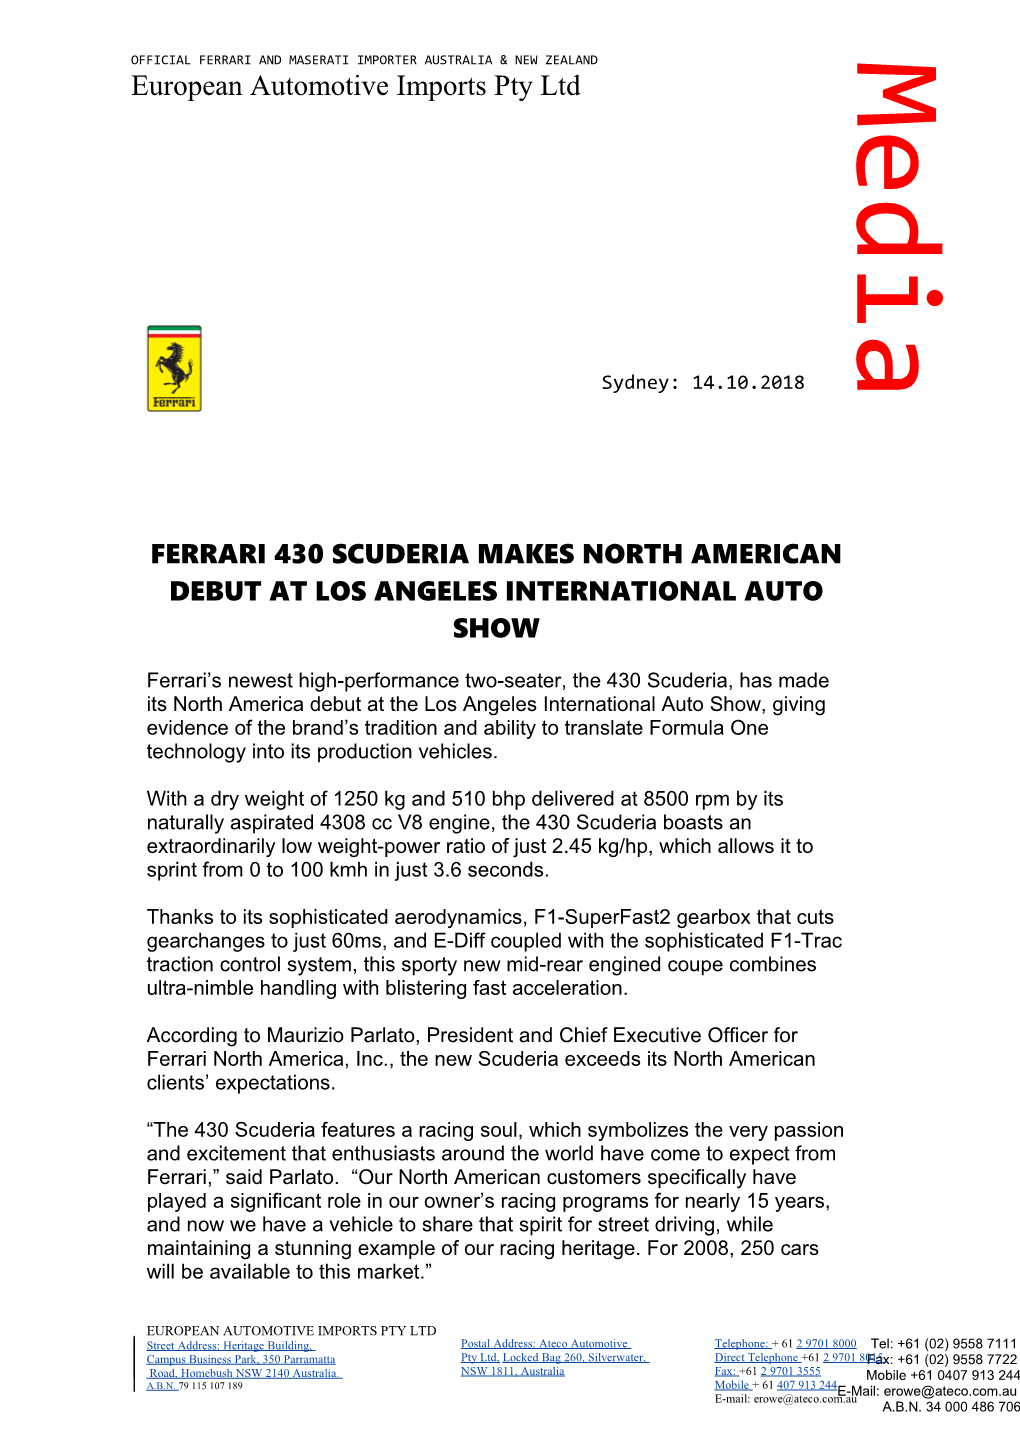 Ferrari 430 Scuderia Makes North American Debutat Los Angeles International Auto Show